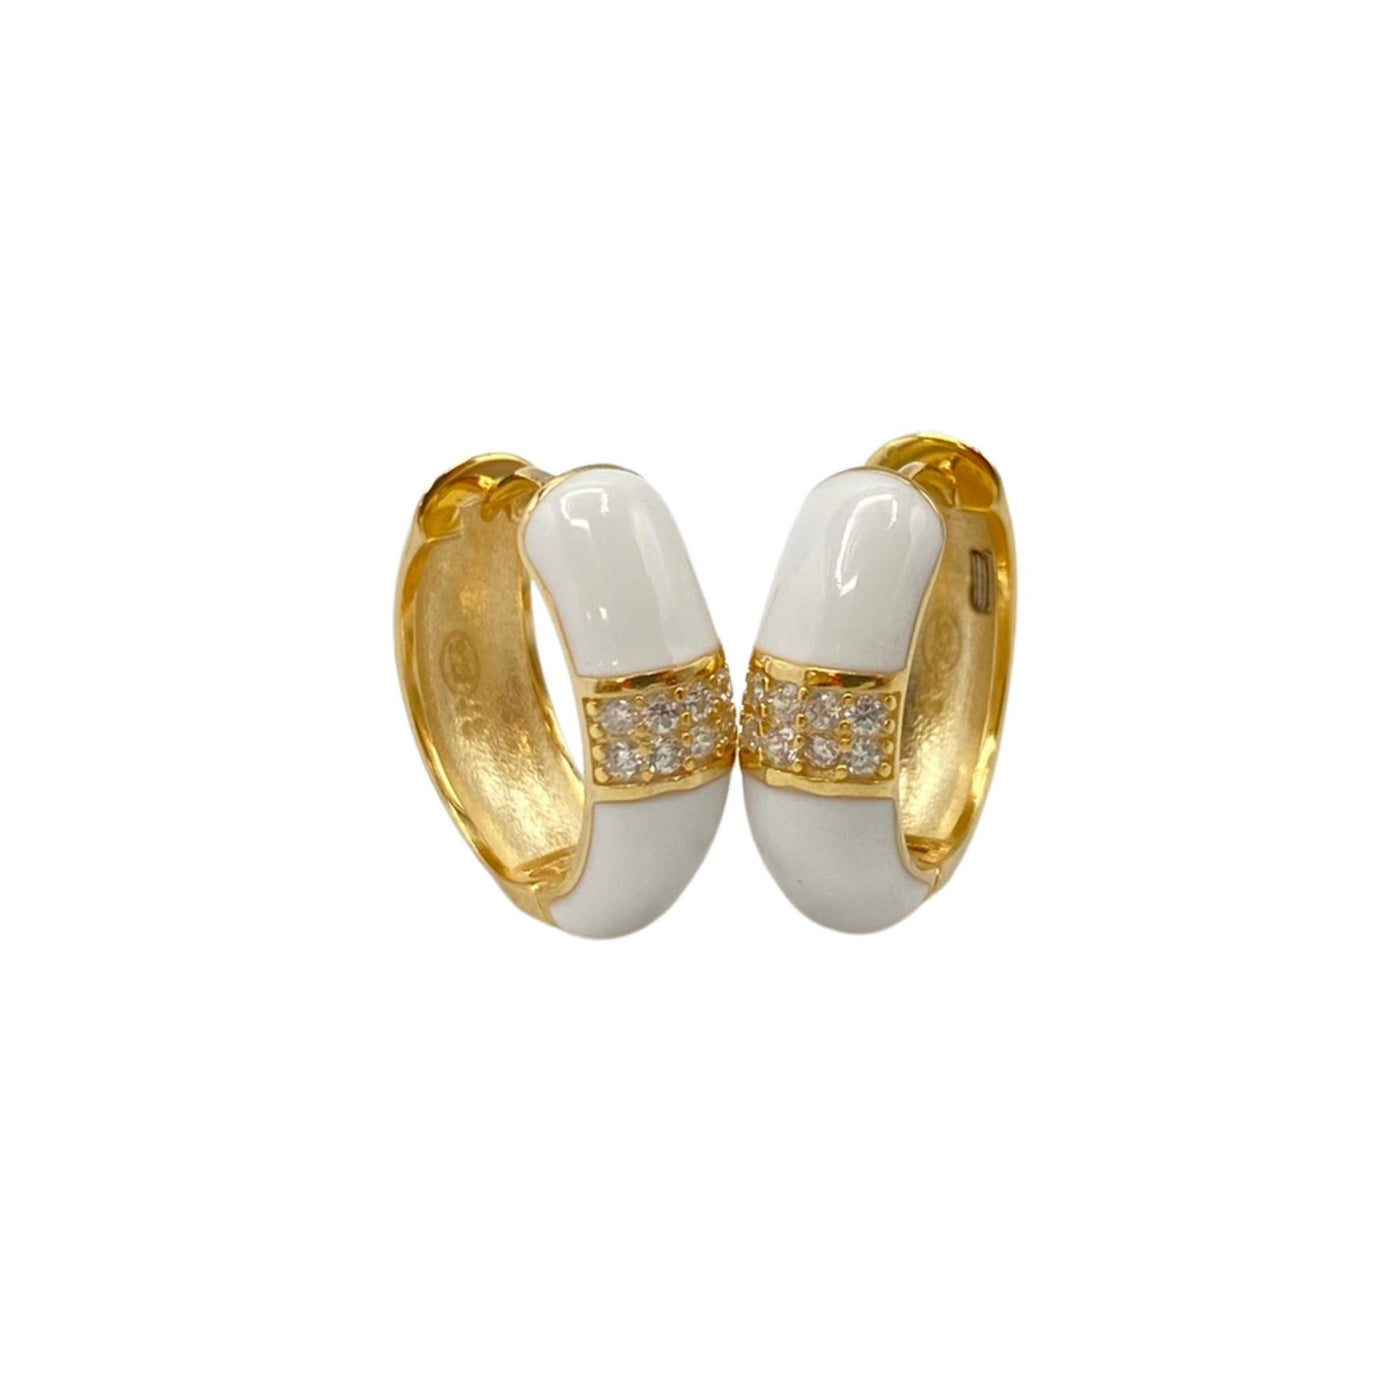 Silver hoop earrings with enamel - 18 mm - yellow